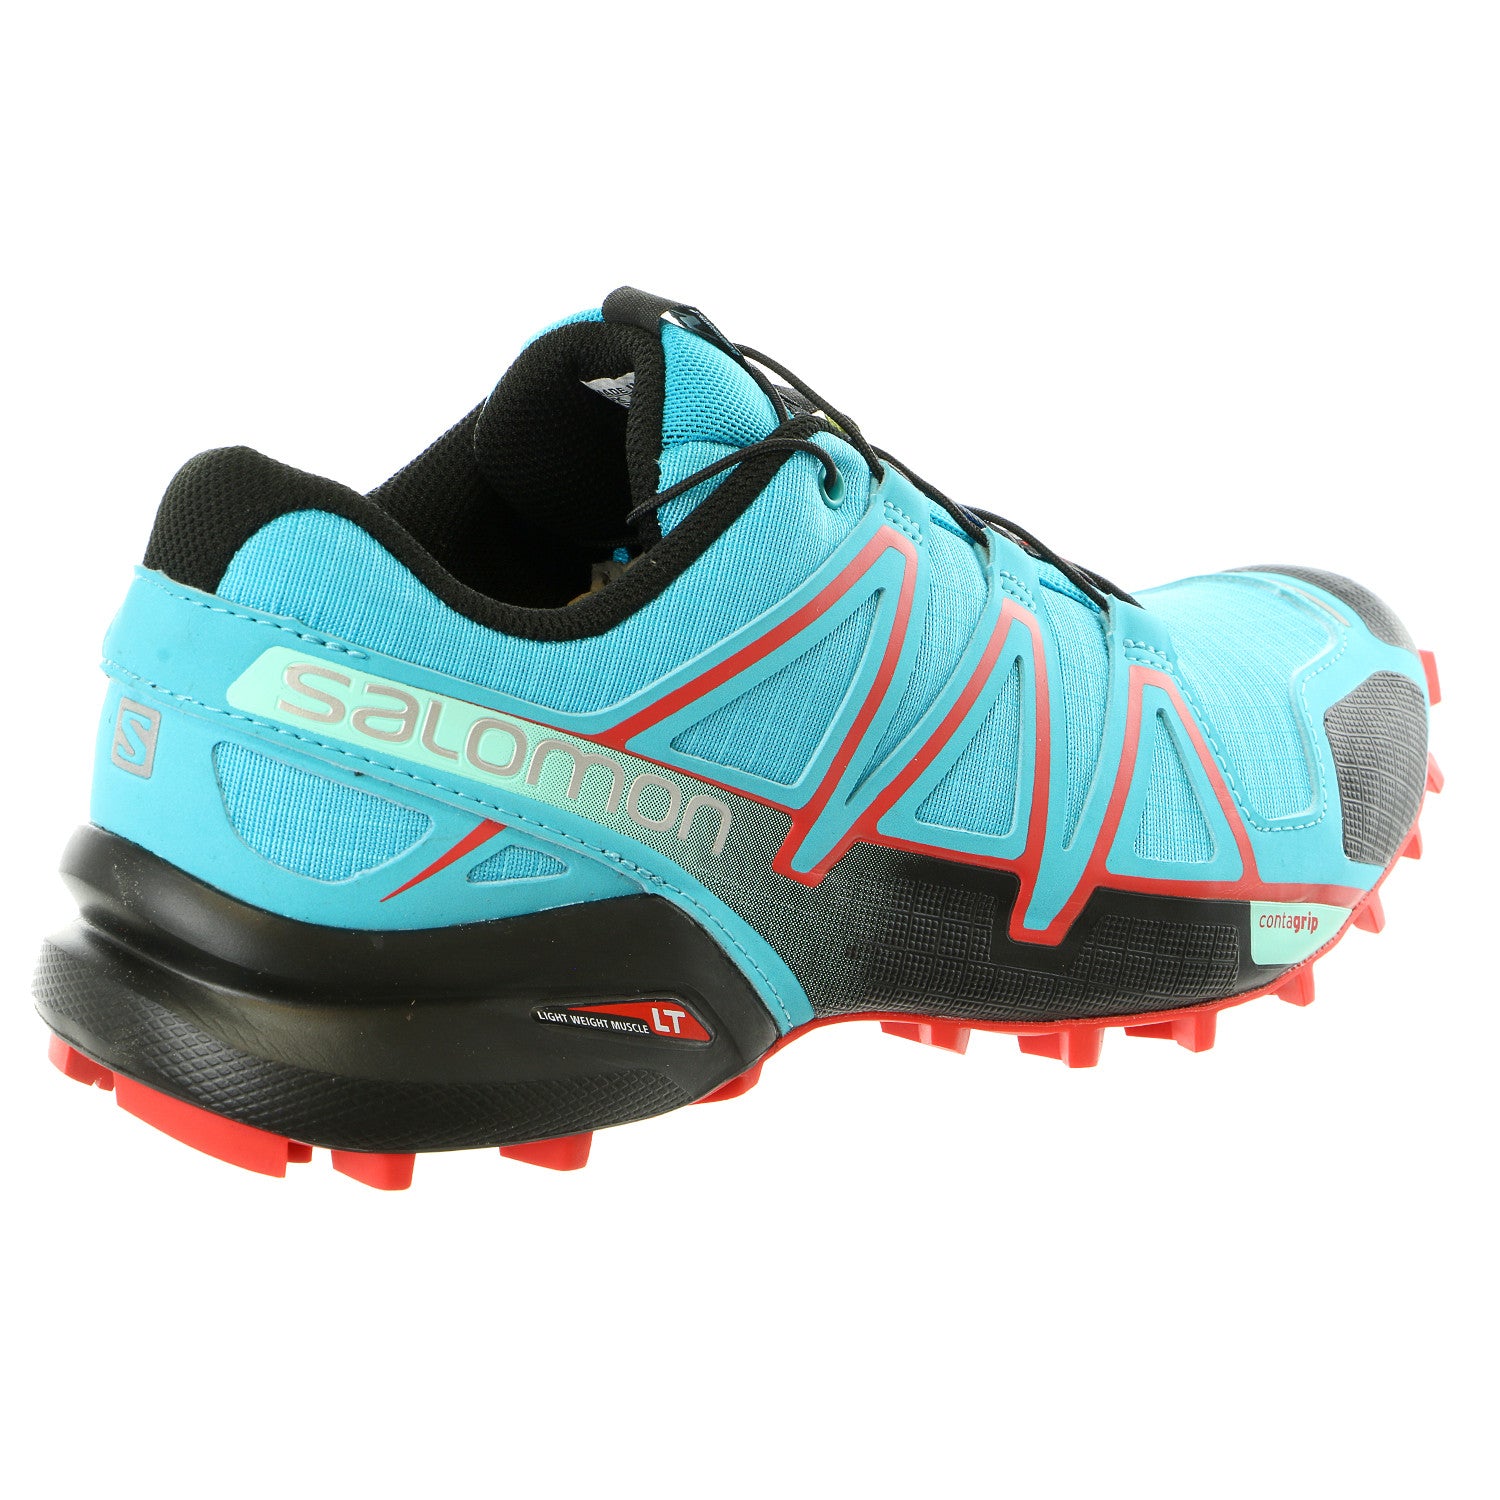 Salomon Speedcross 4 Trail Running Shoes Black